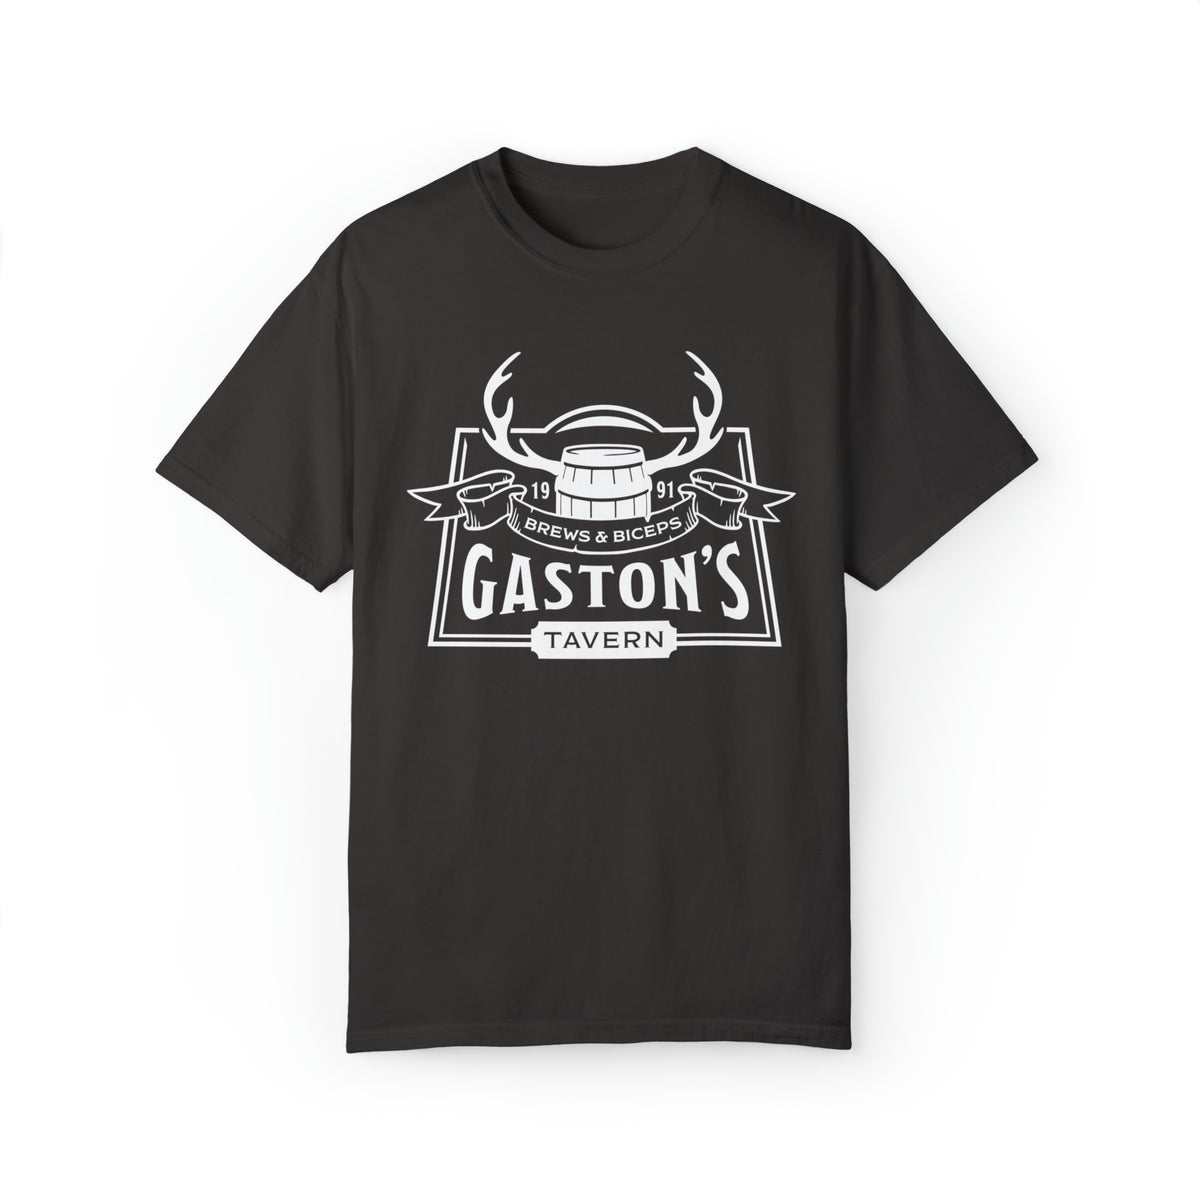 Gaston’s Tavern Comfort Colors Unisex Garment-Dyed T-shirt